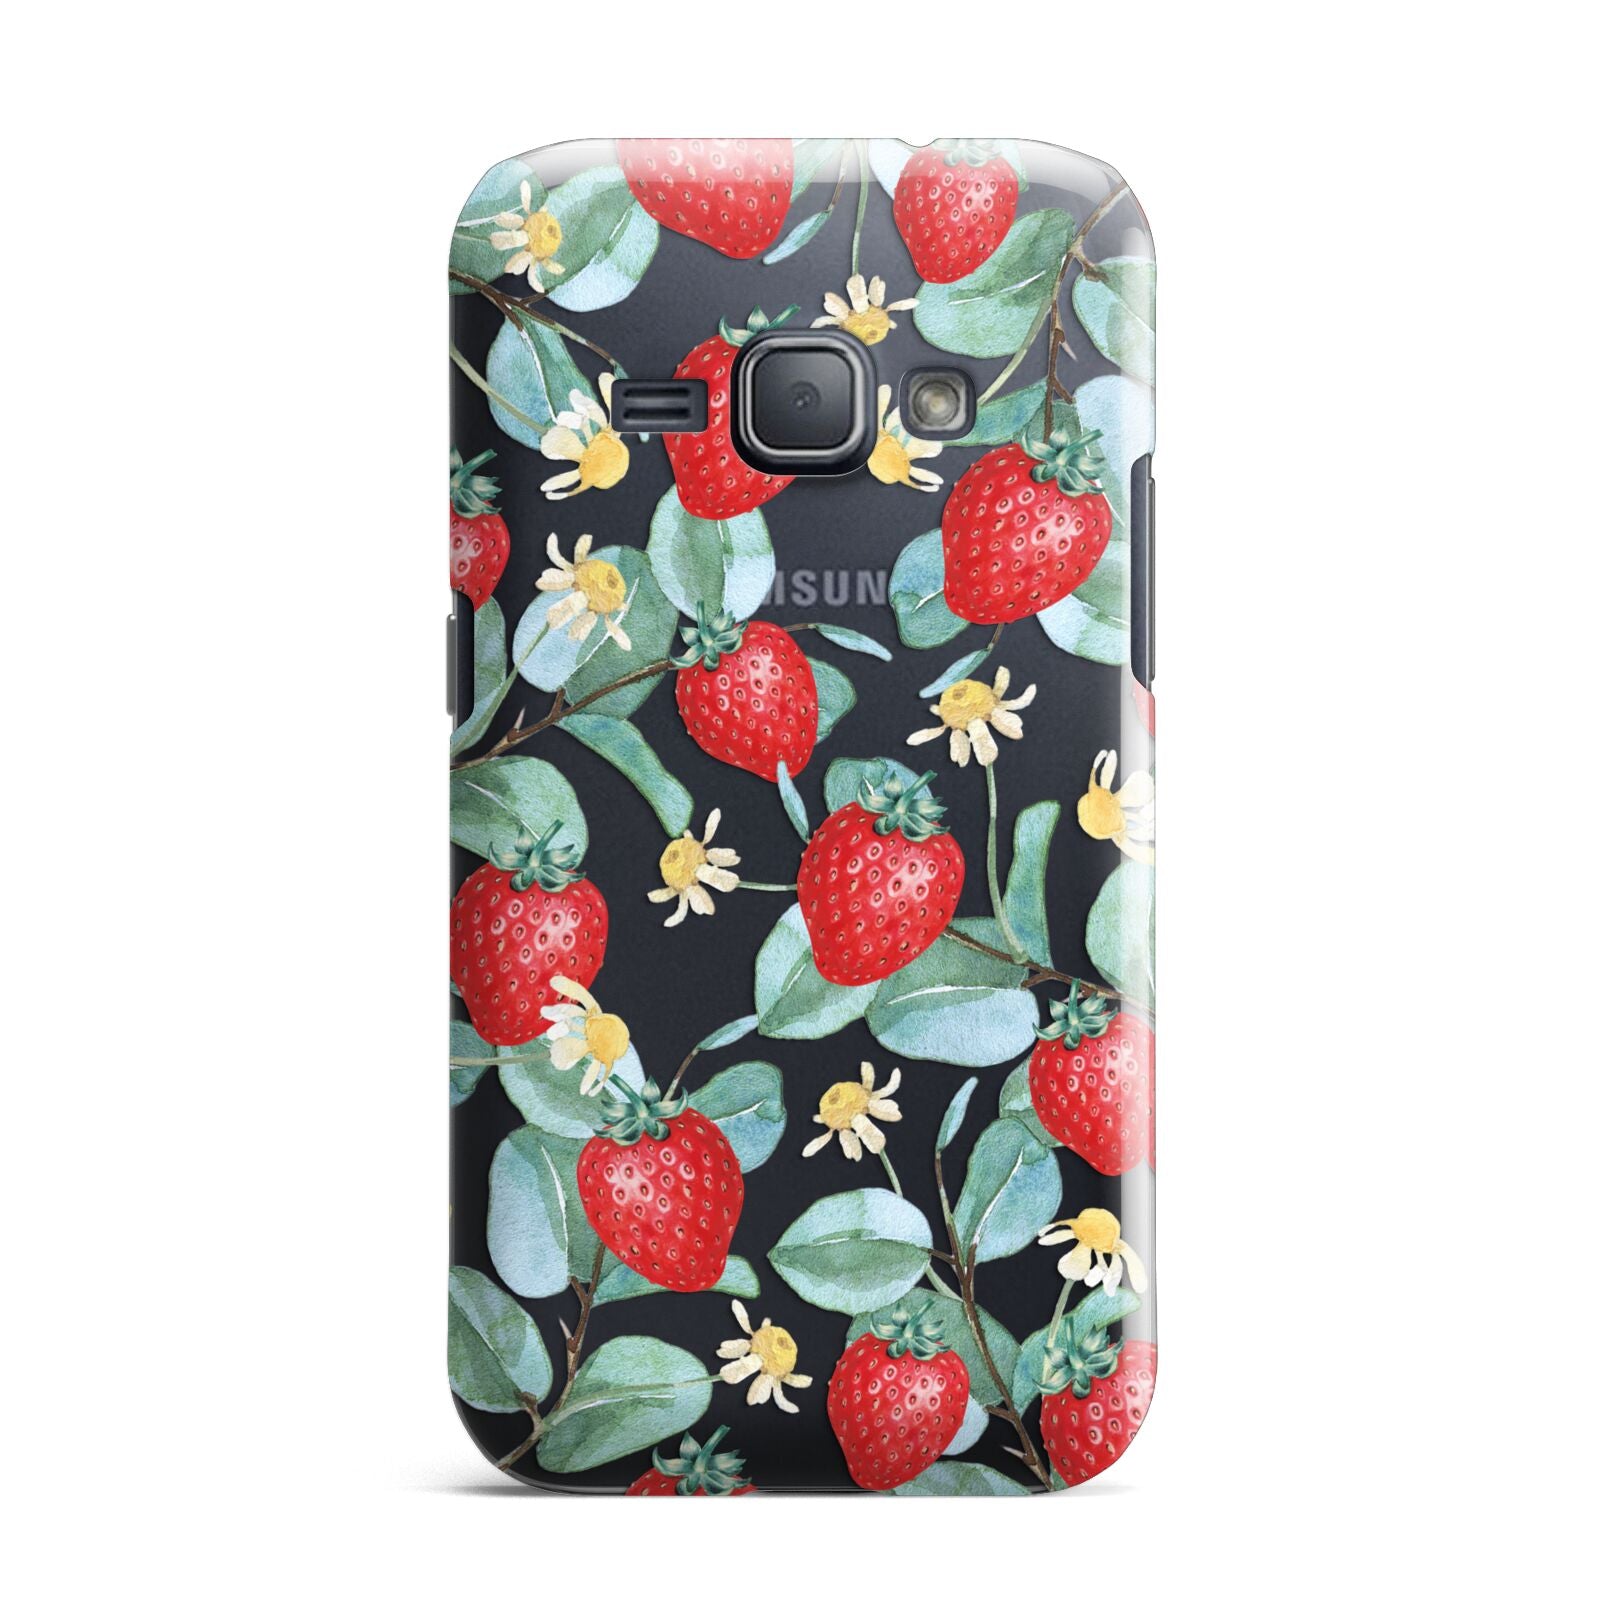 Strawberry Plant Samsung Galaxy J1 2016 Case